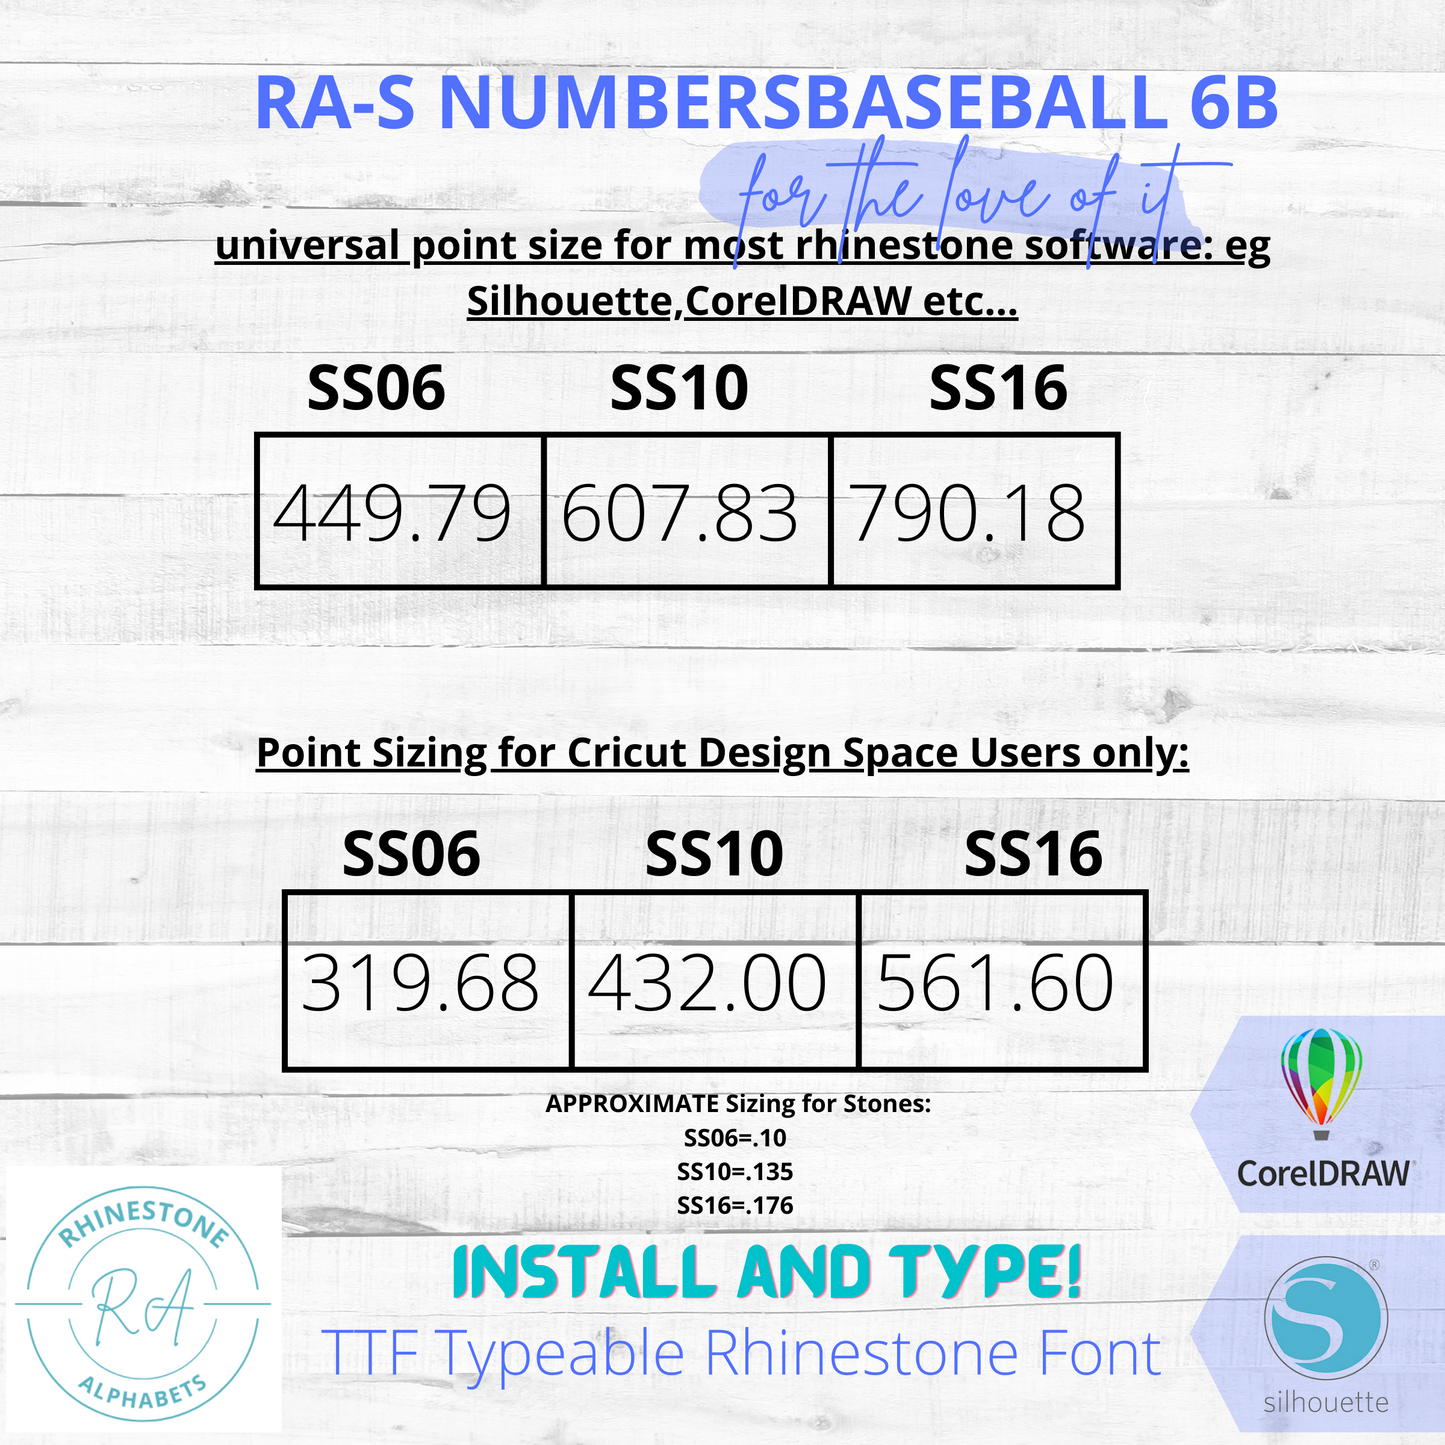 RA-S Numbersd Baseball 6B